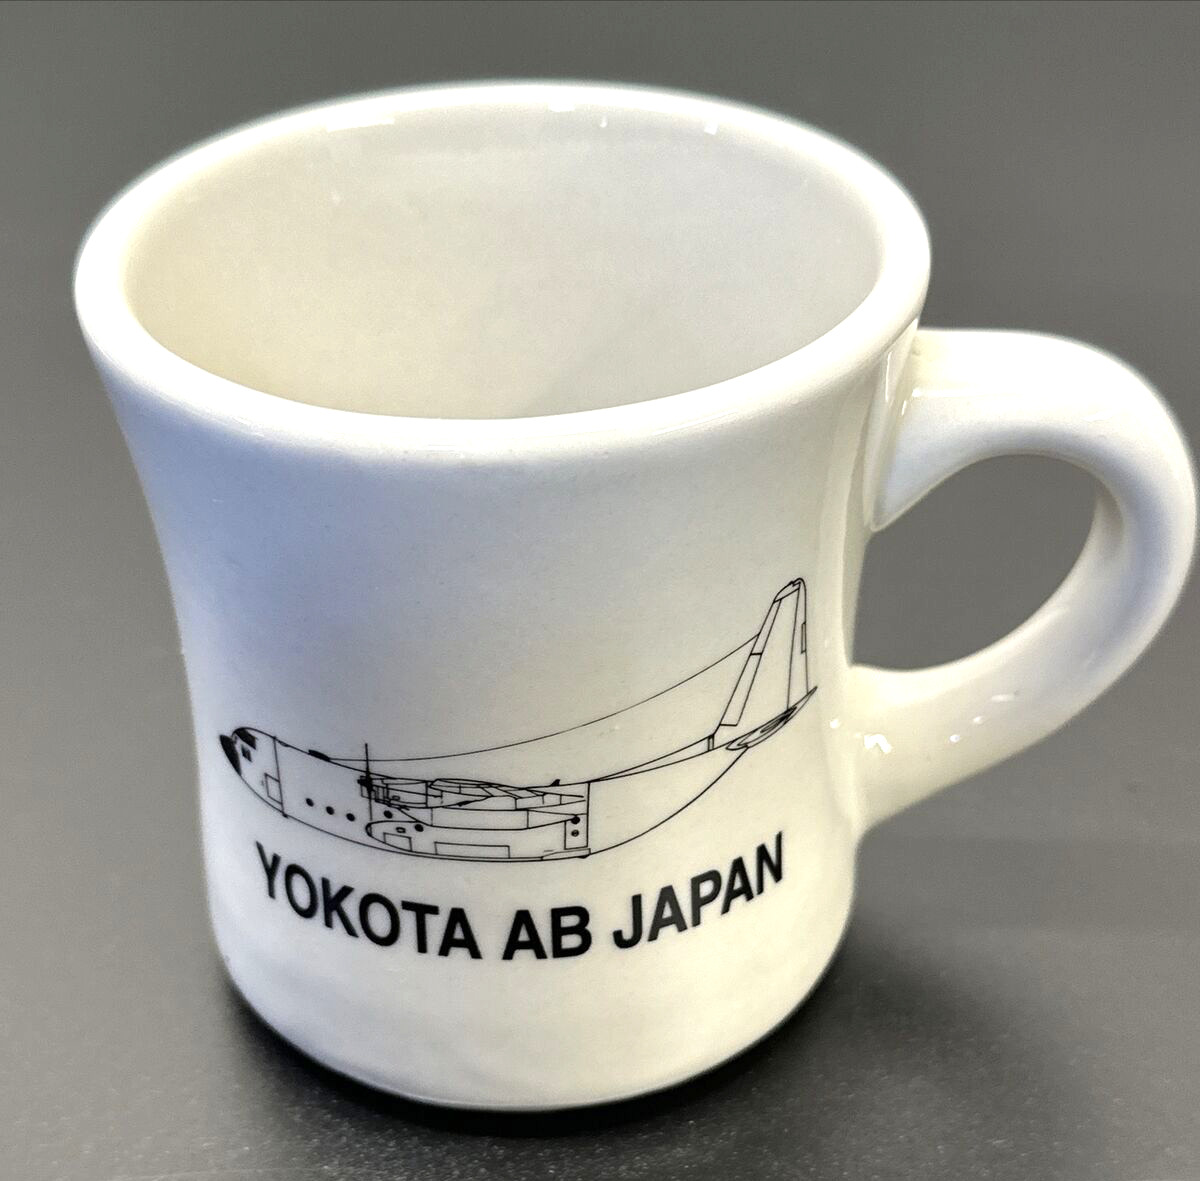 VTG 1990s YOKOTA Air Base Japan, Coffee Mug/Cup, 375 MS Patch, C 130 Aircraft